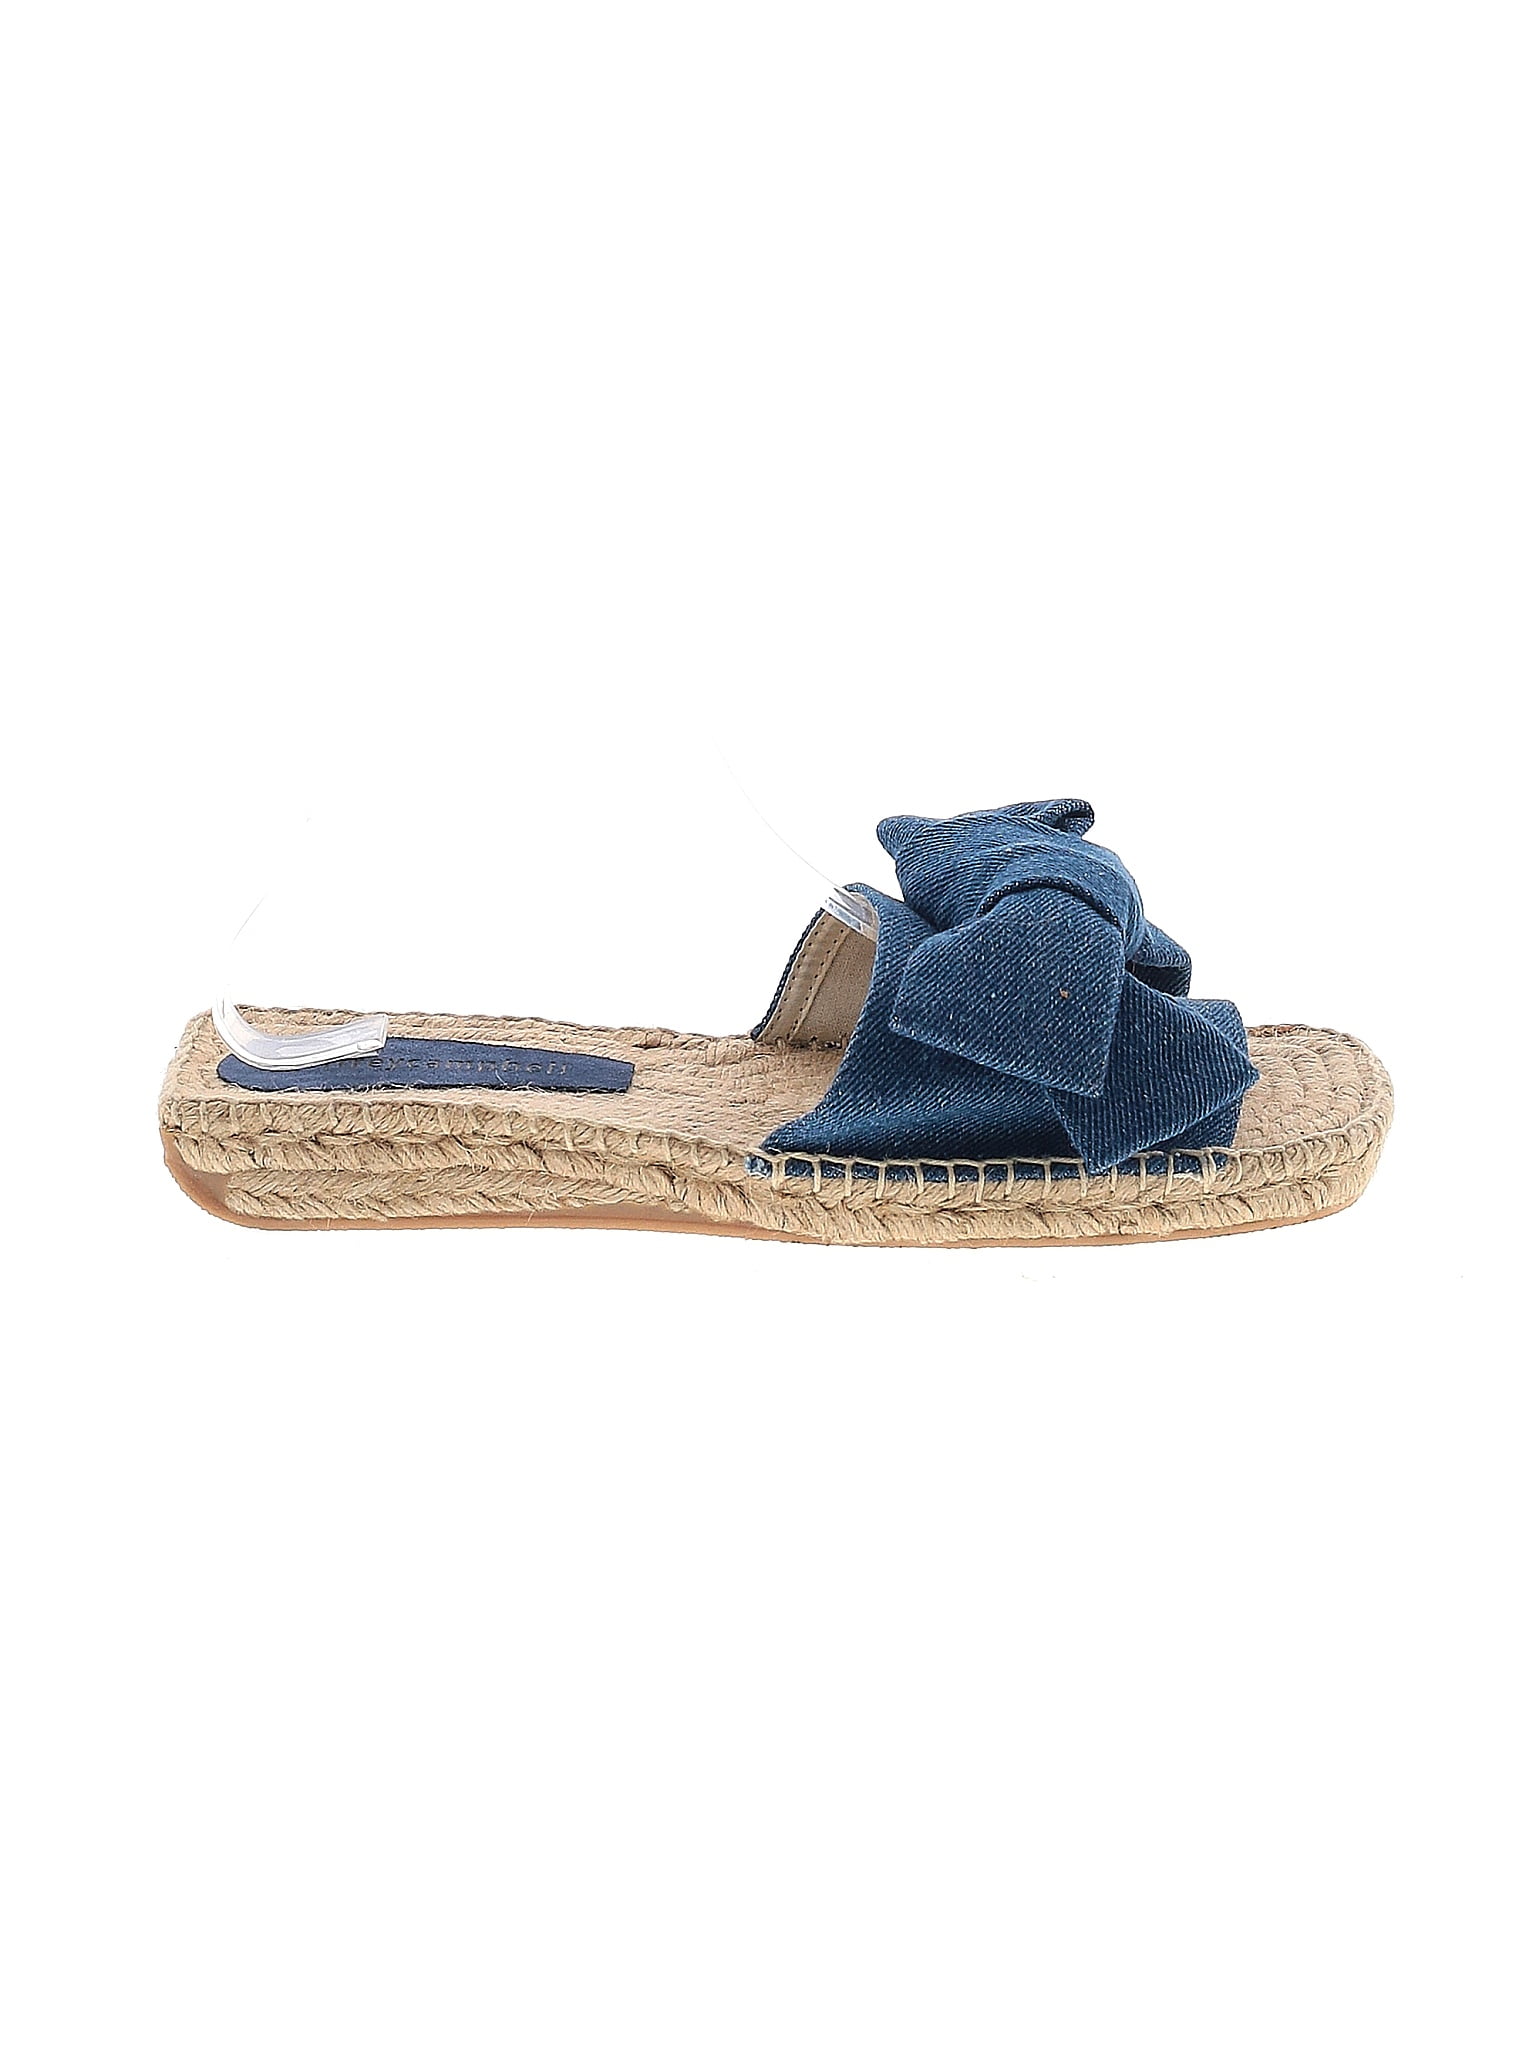 Jeffrey Campbell Solid Blue Sandals Size 11 - 70% off | thredUP